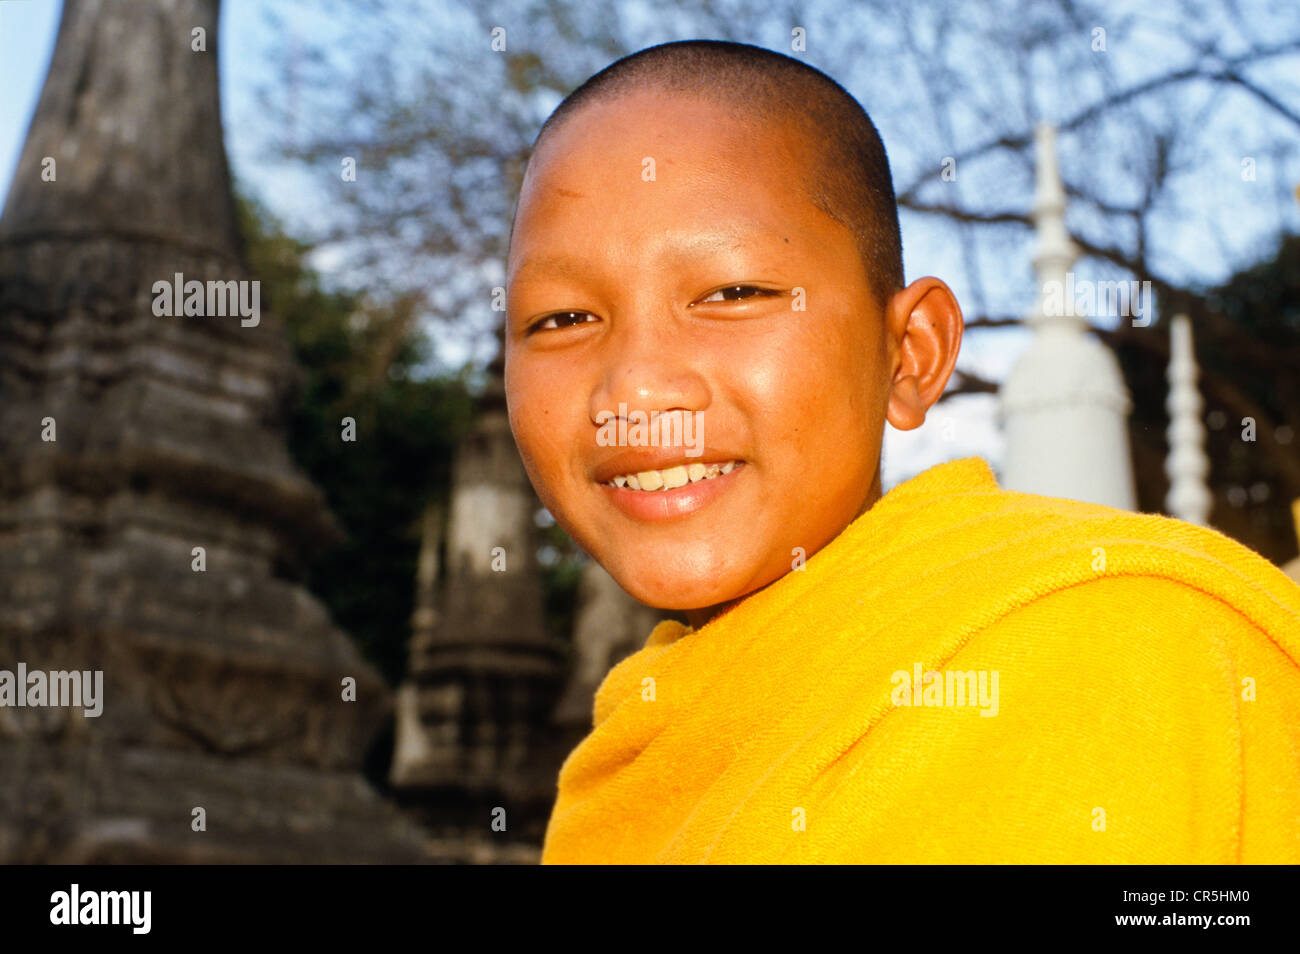 Vida de monje en Wat Bo, Siem Reap, Camboya, en el sudeste de Asia Foto de stock